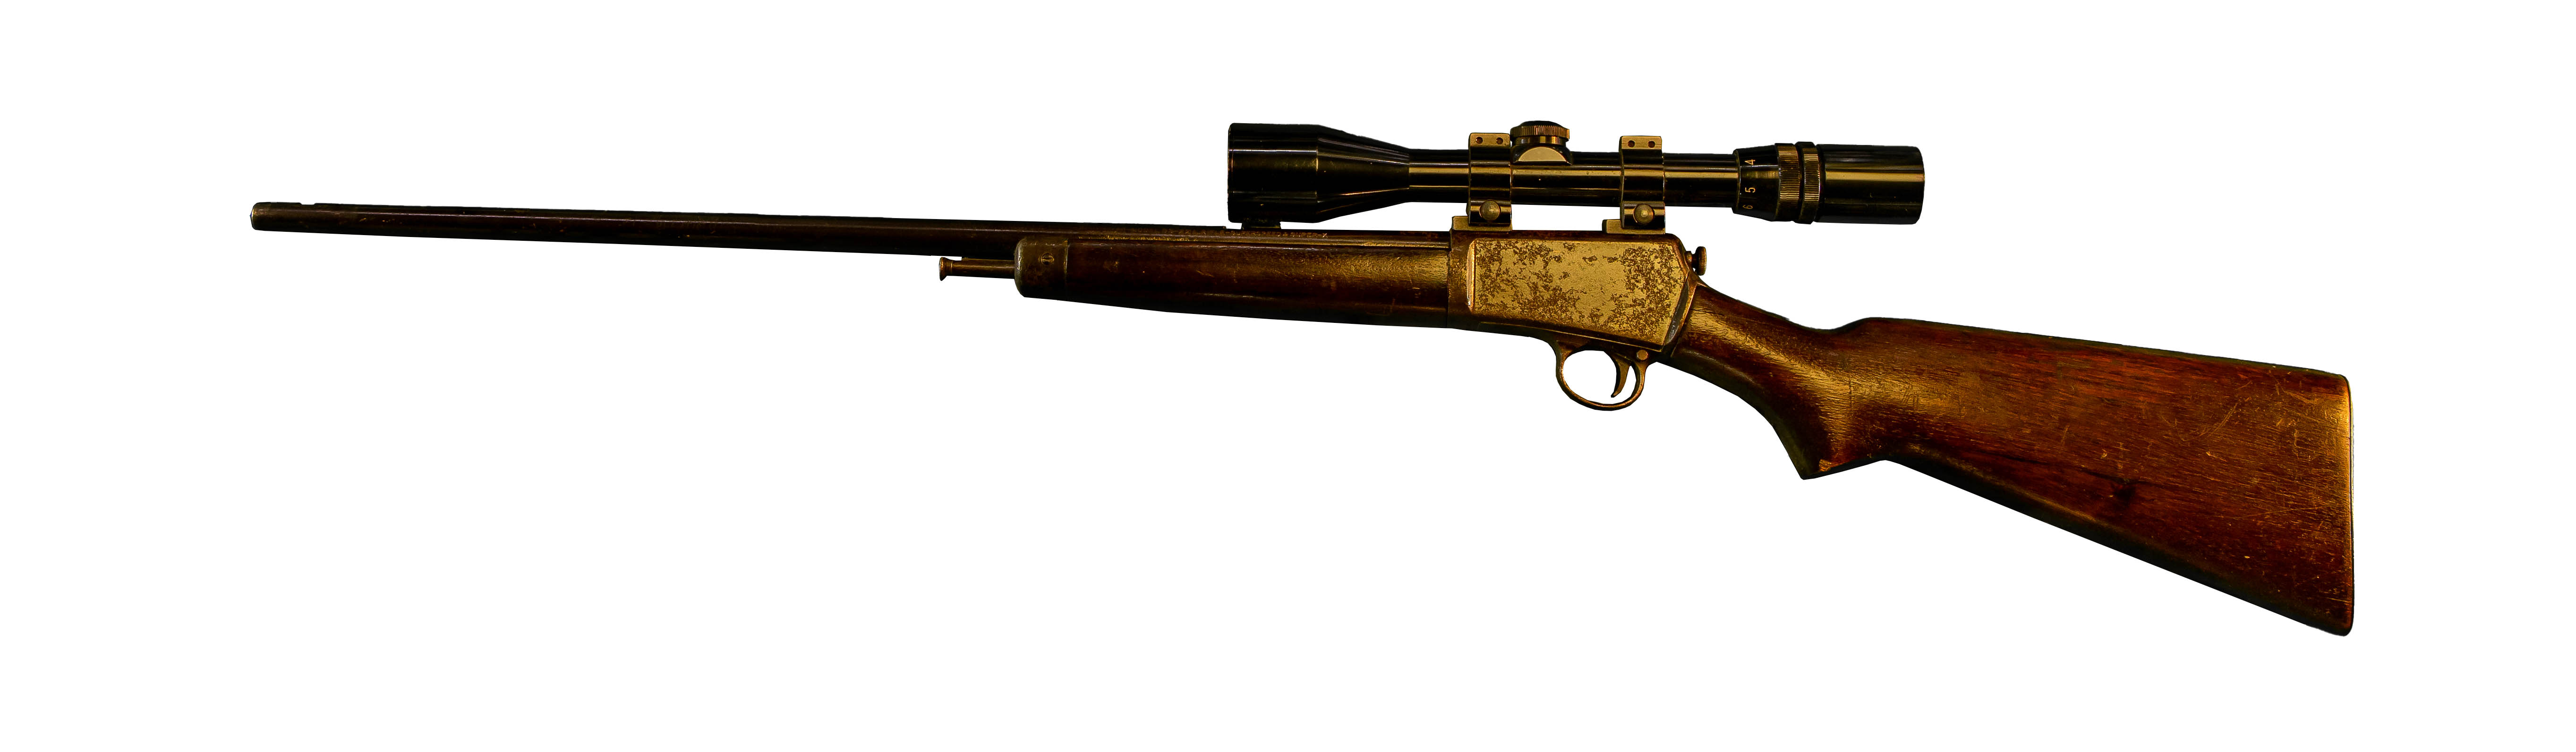 Winchester model 63